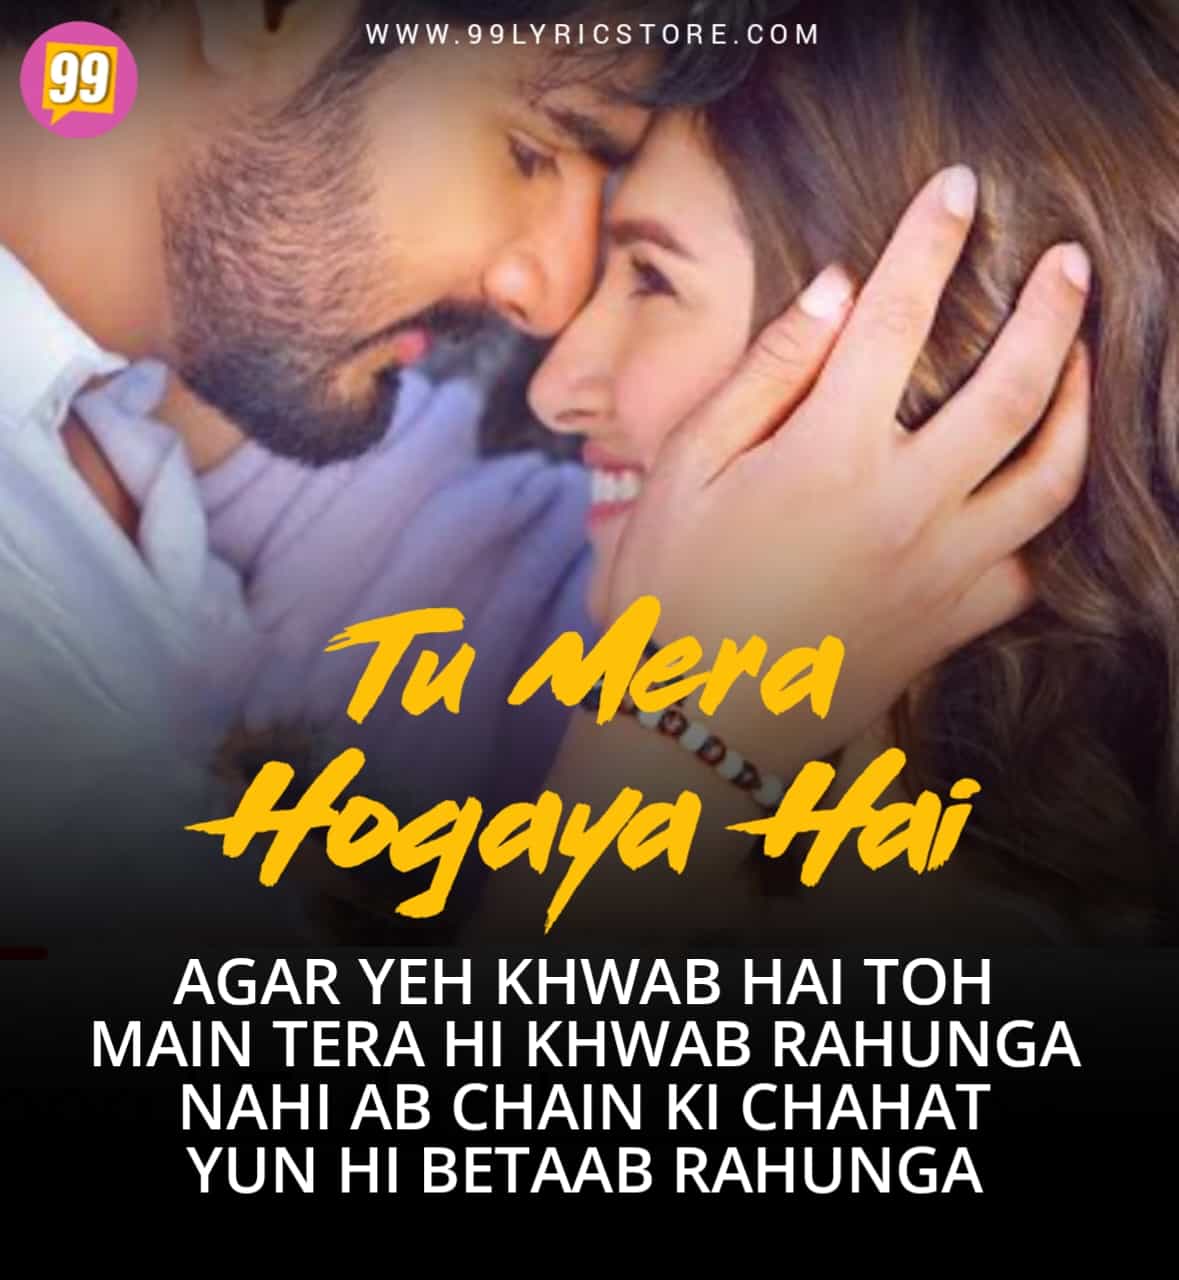 Tu Mera Hogaya Hai love hindi song lyrics image from movie Tadap Features Tara Sutaria and Ahan Shetty